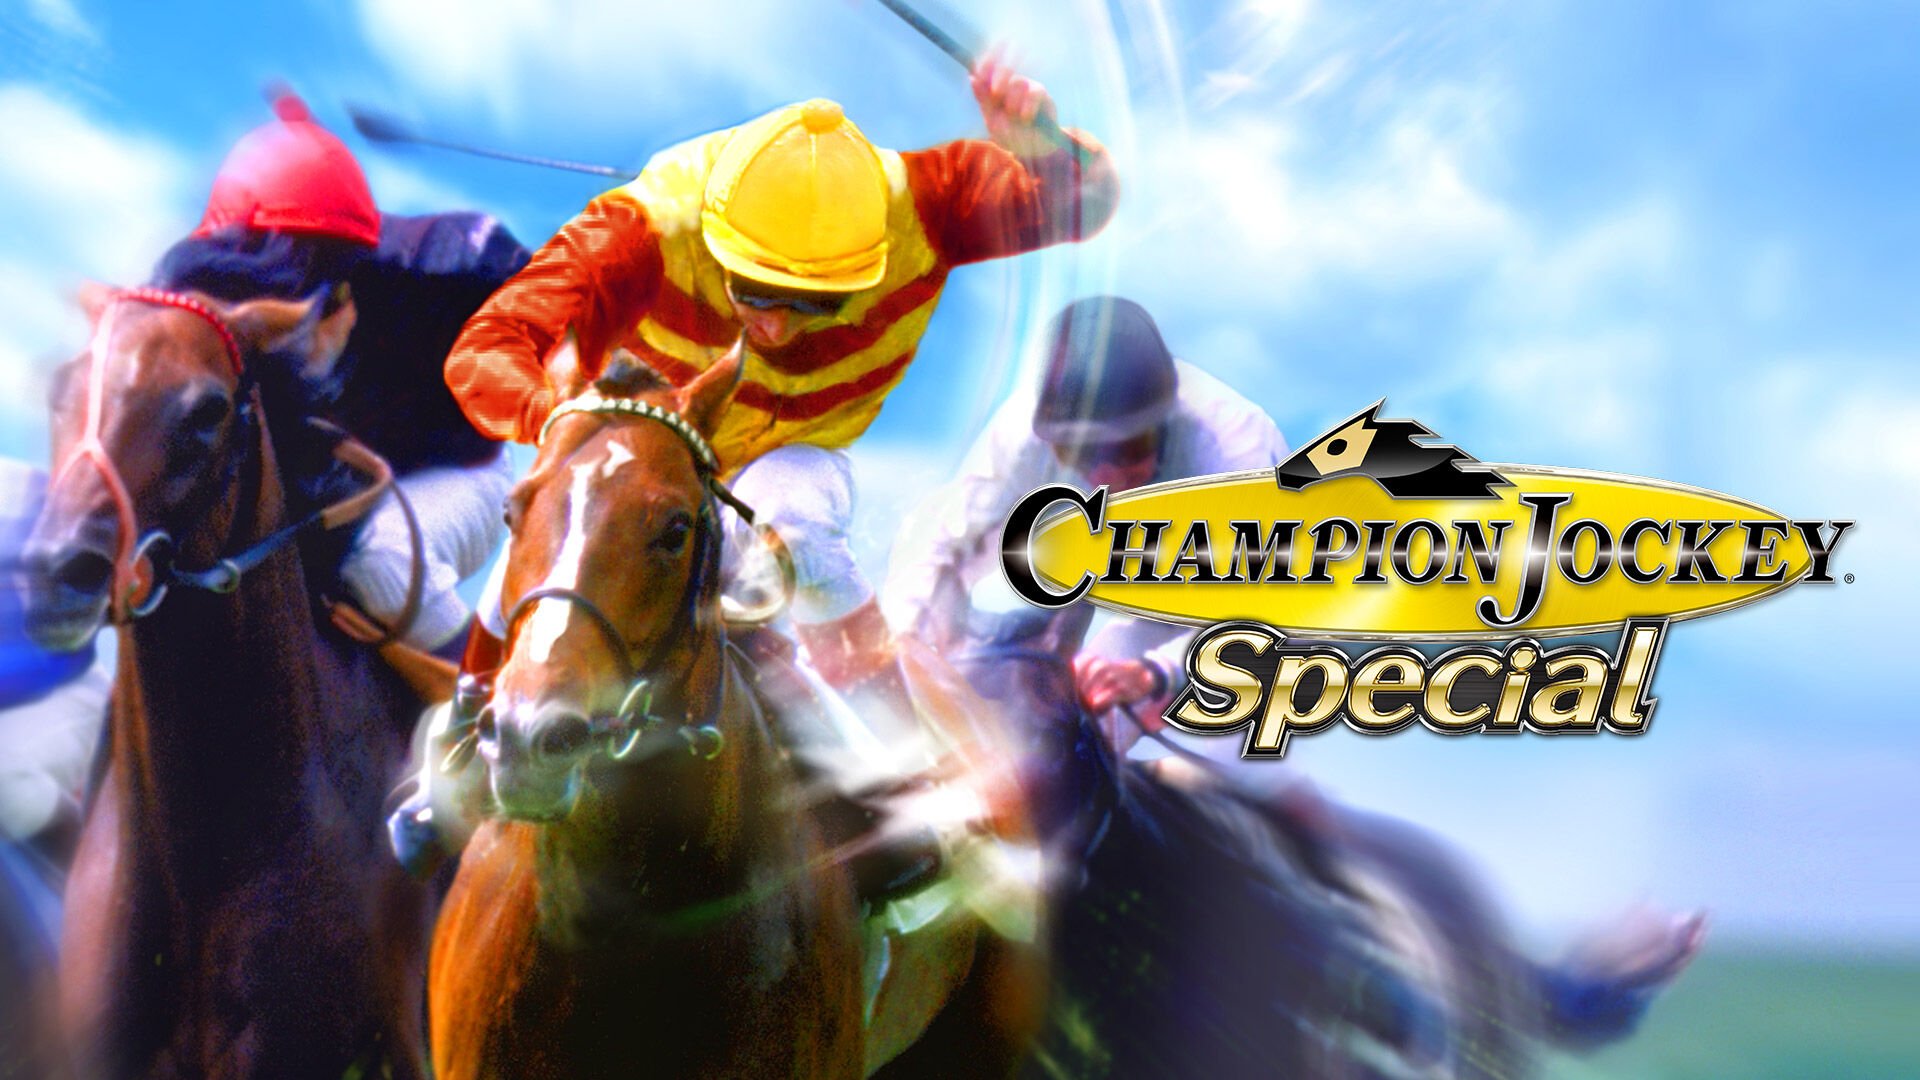 Champion Jockey Special - Switchゲームソフト/ゲーム機本体 - 家庭用 